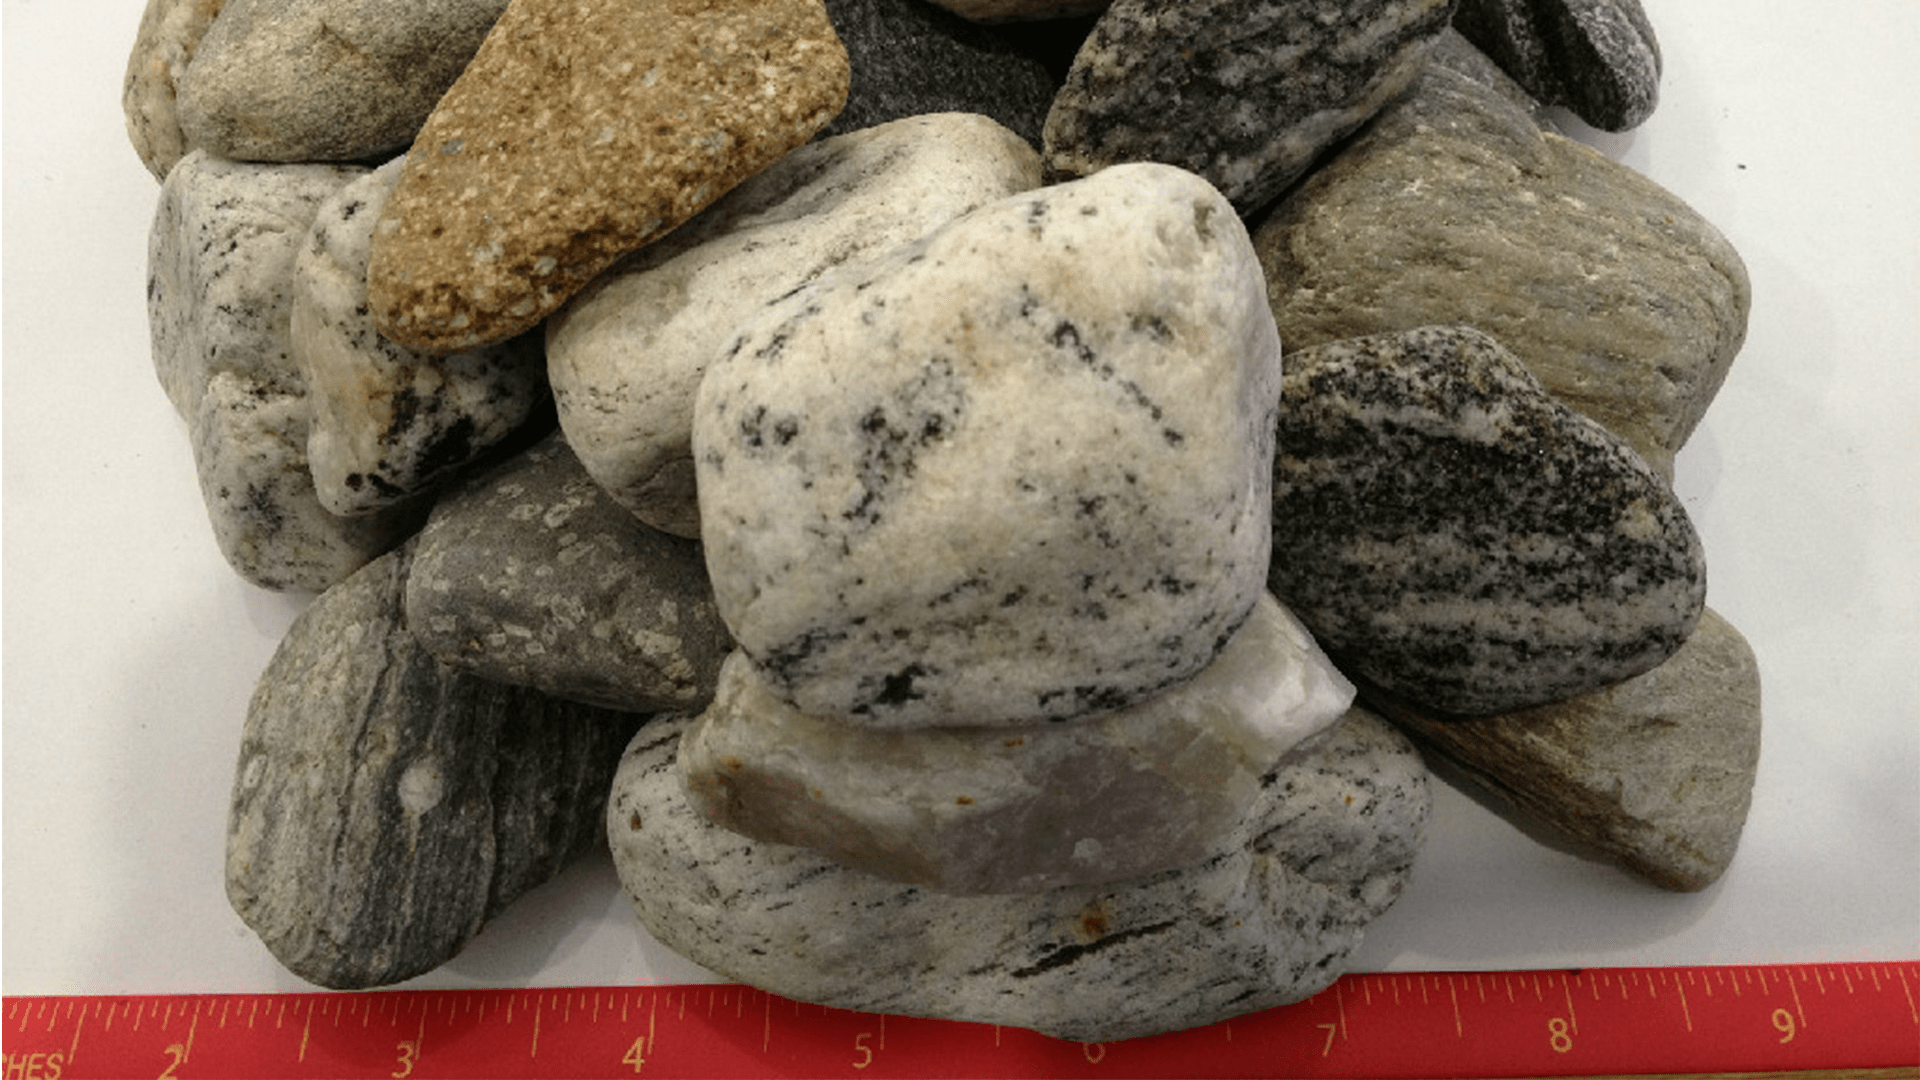 Leopard Granite 1 1/2" - 2 1/2". Pebbles.